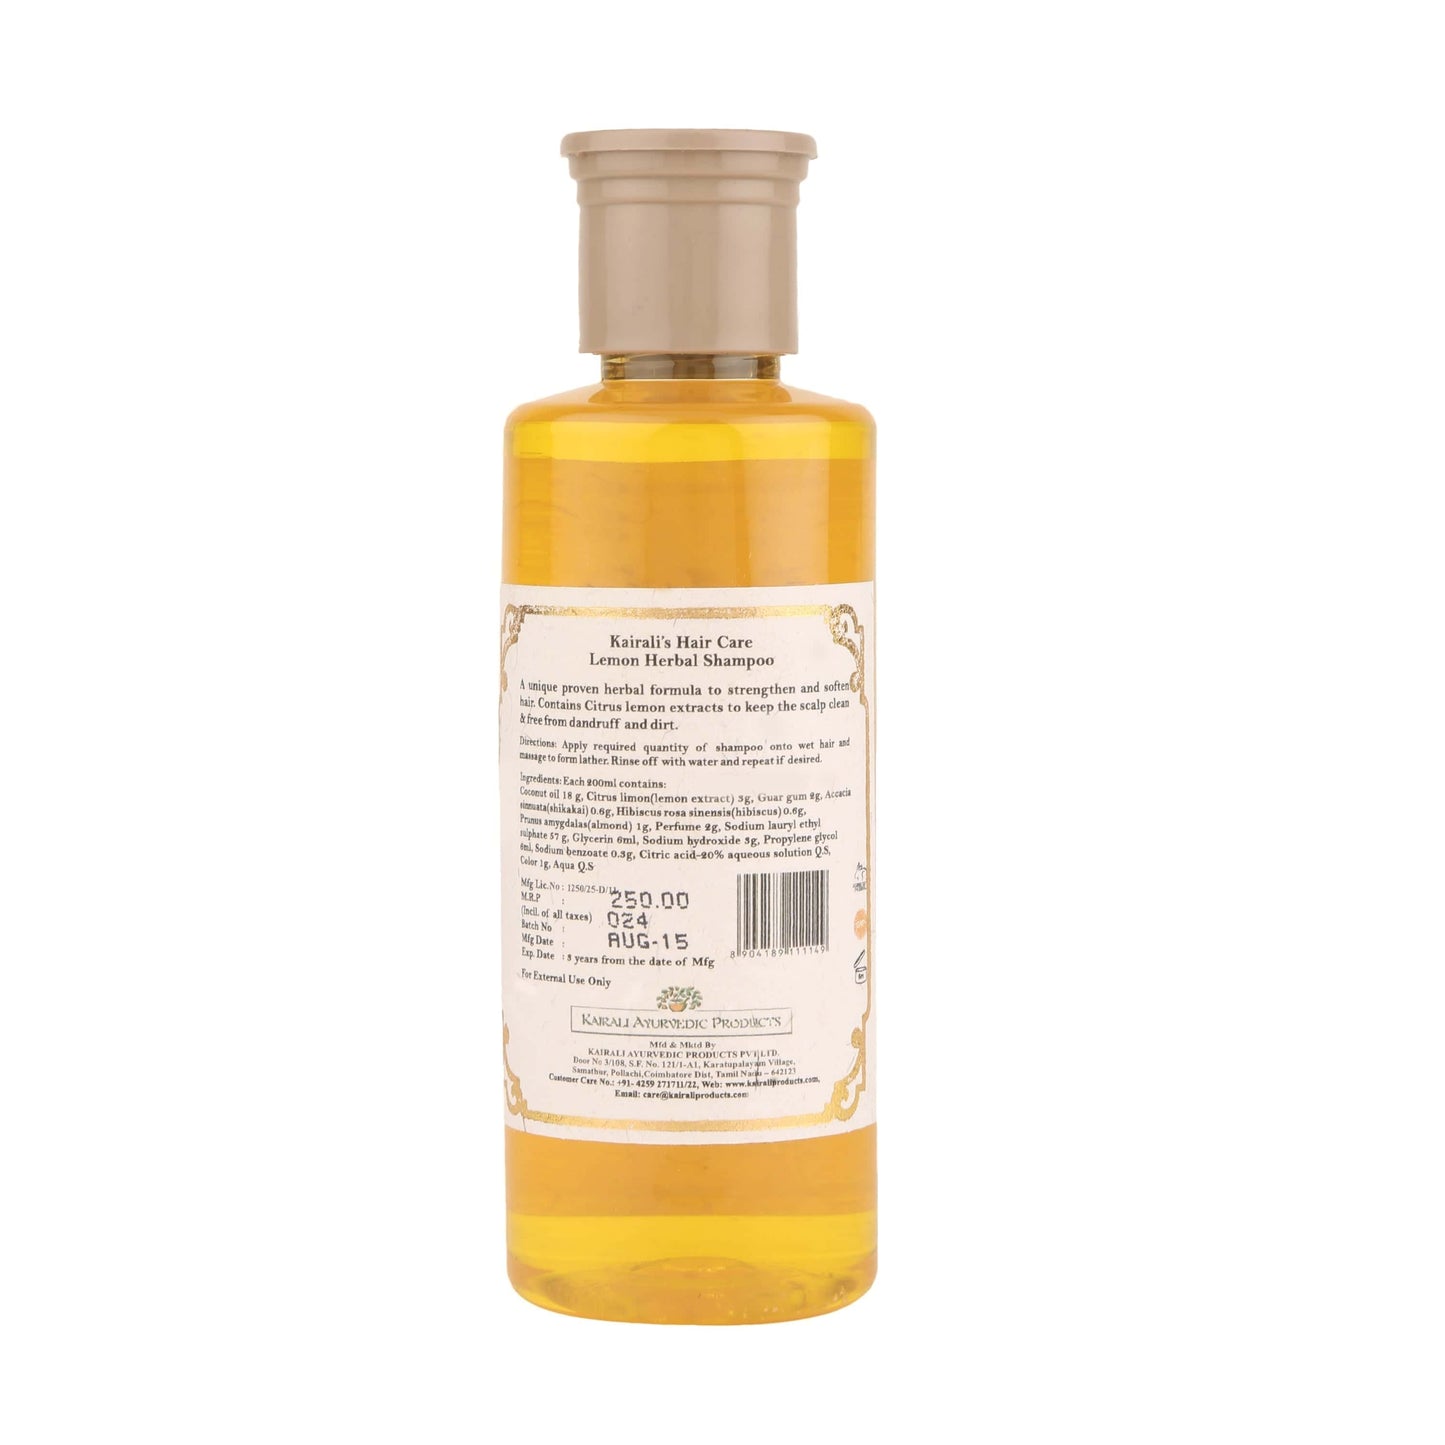 Kairali Ayurveda Group Kairali Lemon Shampoo - Anti-Dandruff Shampoo with Lemon Extracts (200 ml)